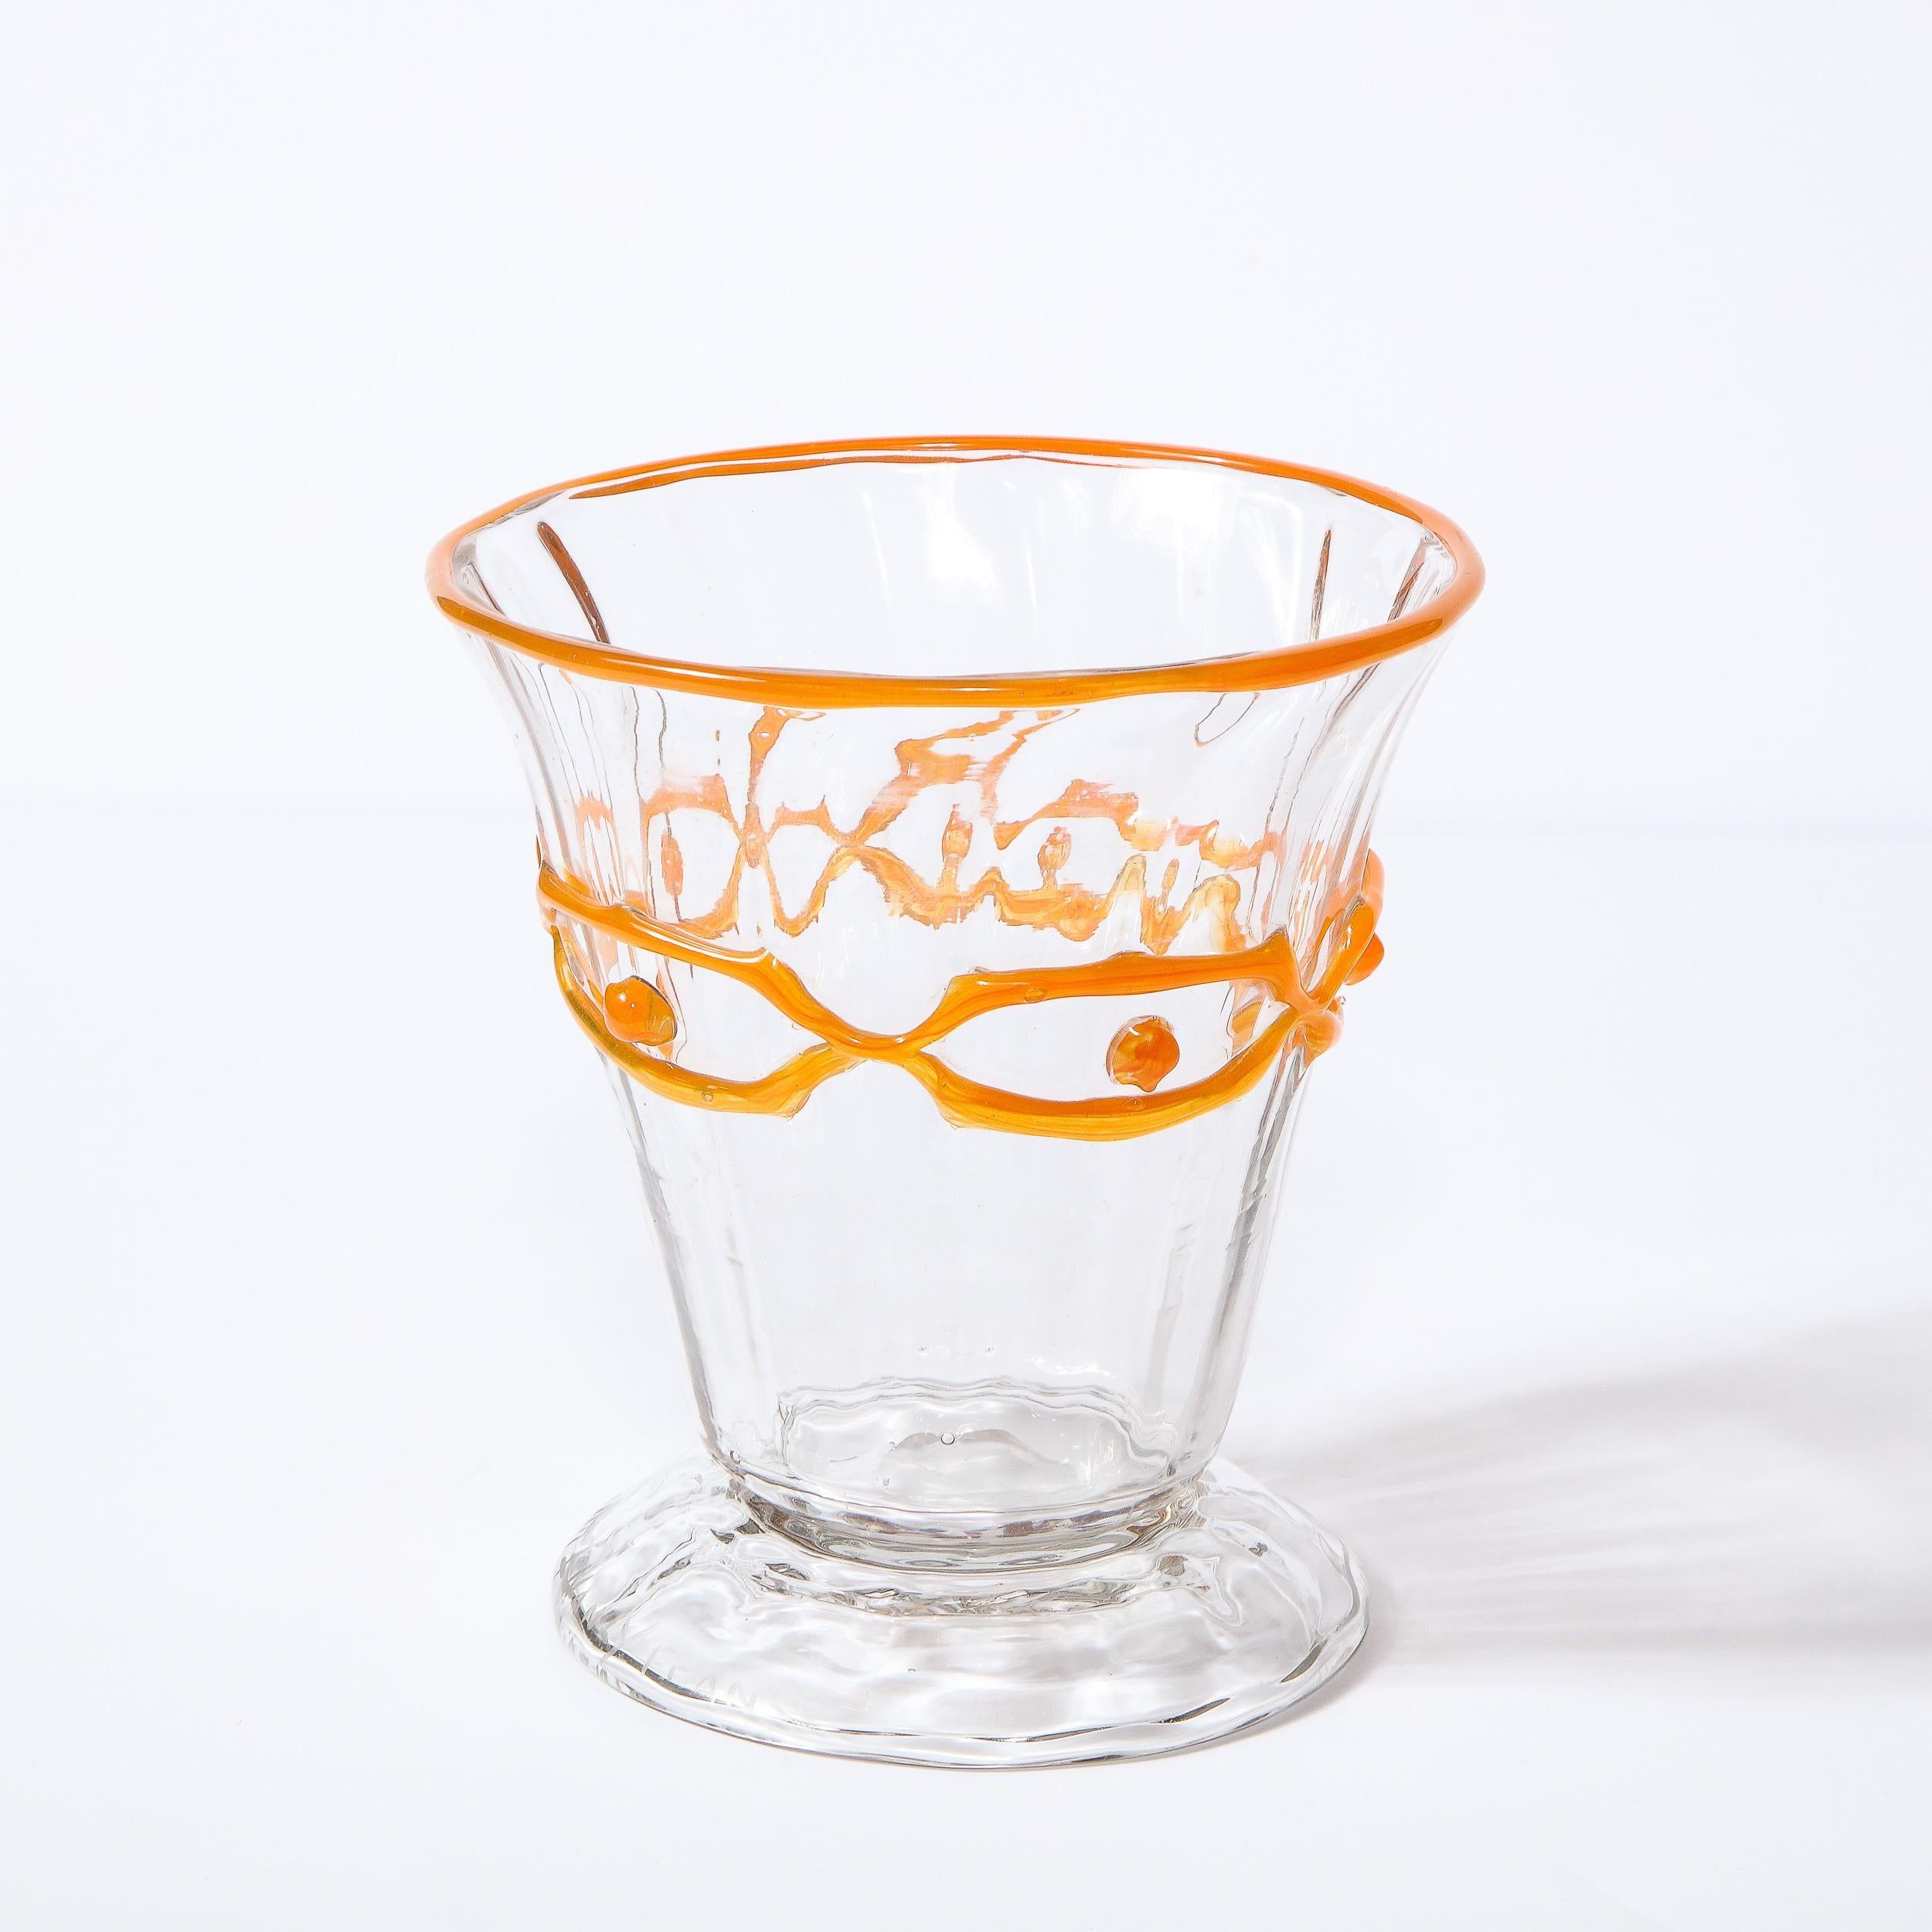 Art Glass Art Deco Translucent Glass Vase w/ Tangerine Accents in Relief Signed Daum Nancy